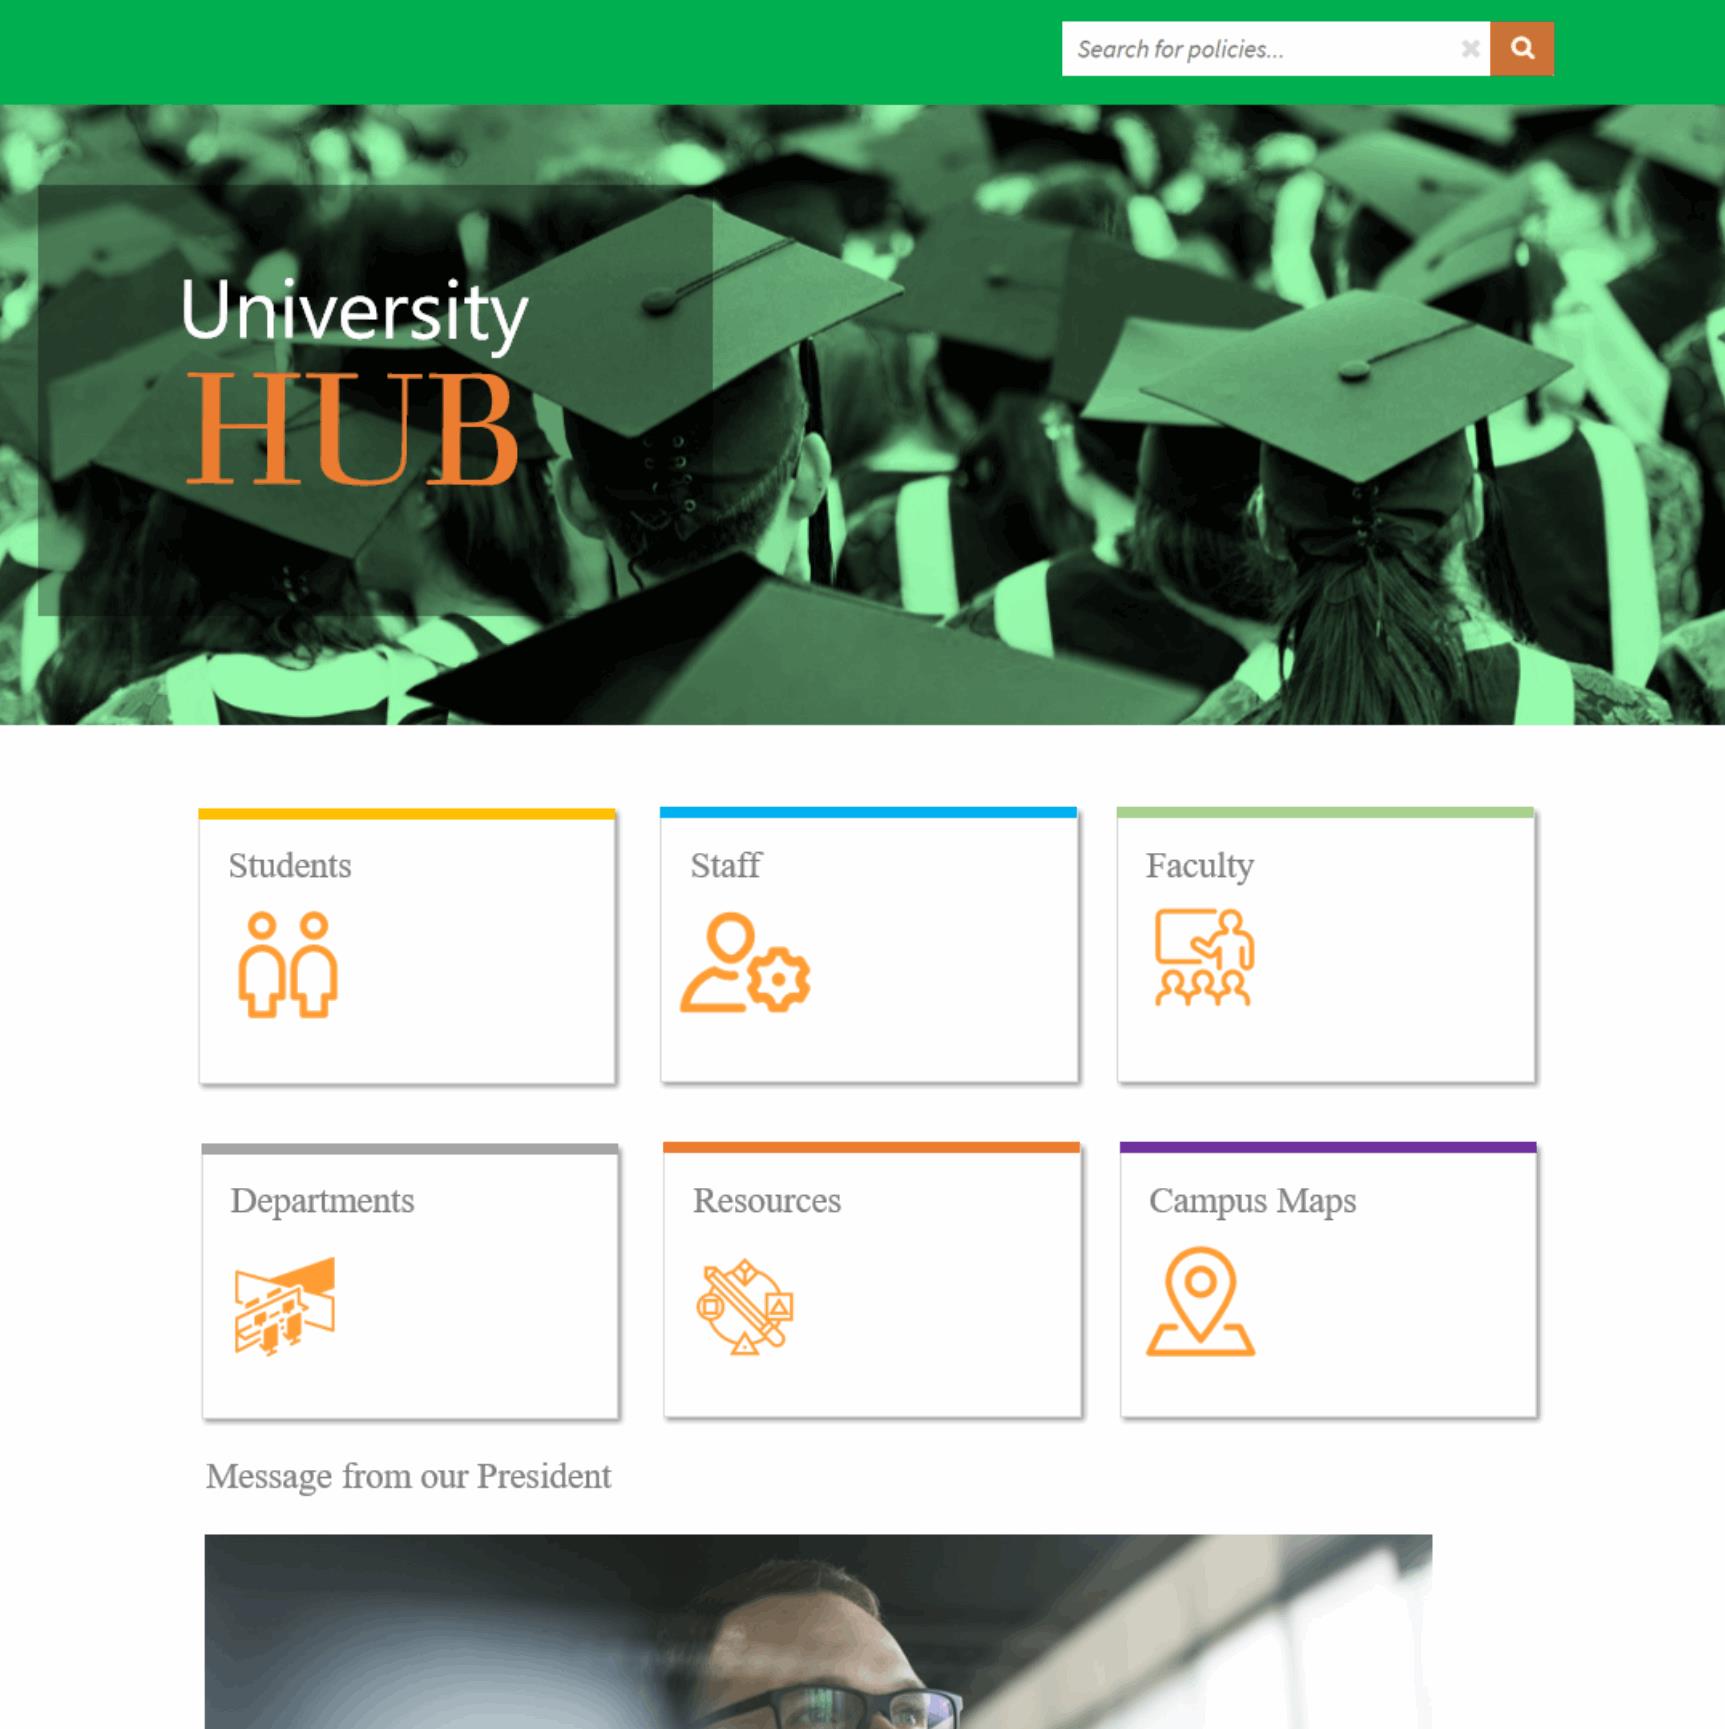 University public-facing portal home page